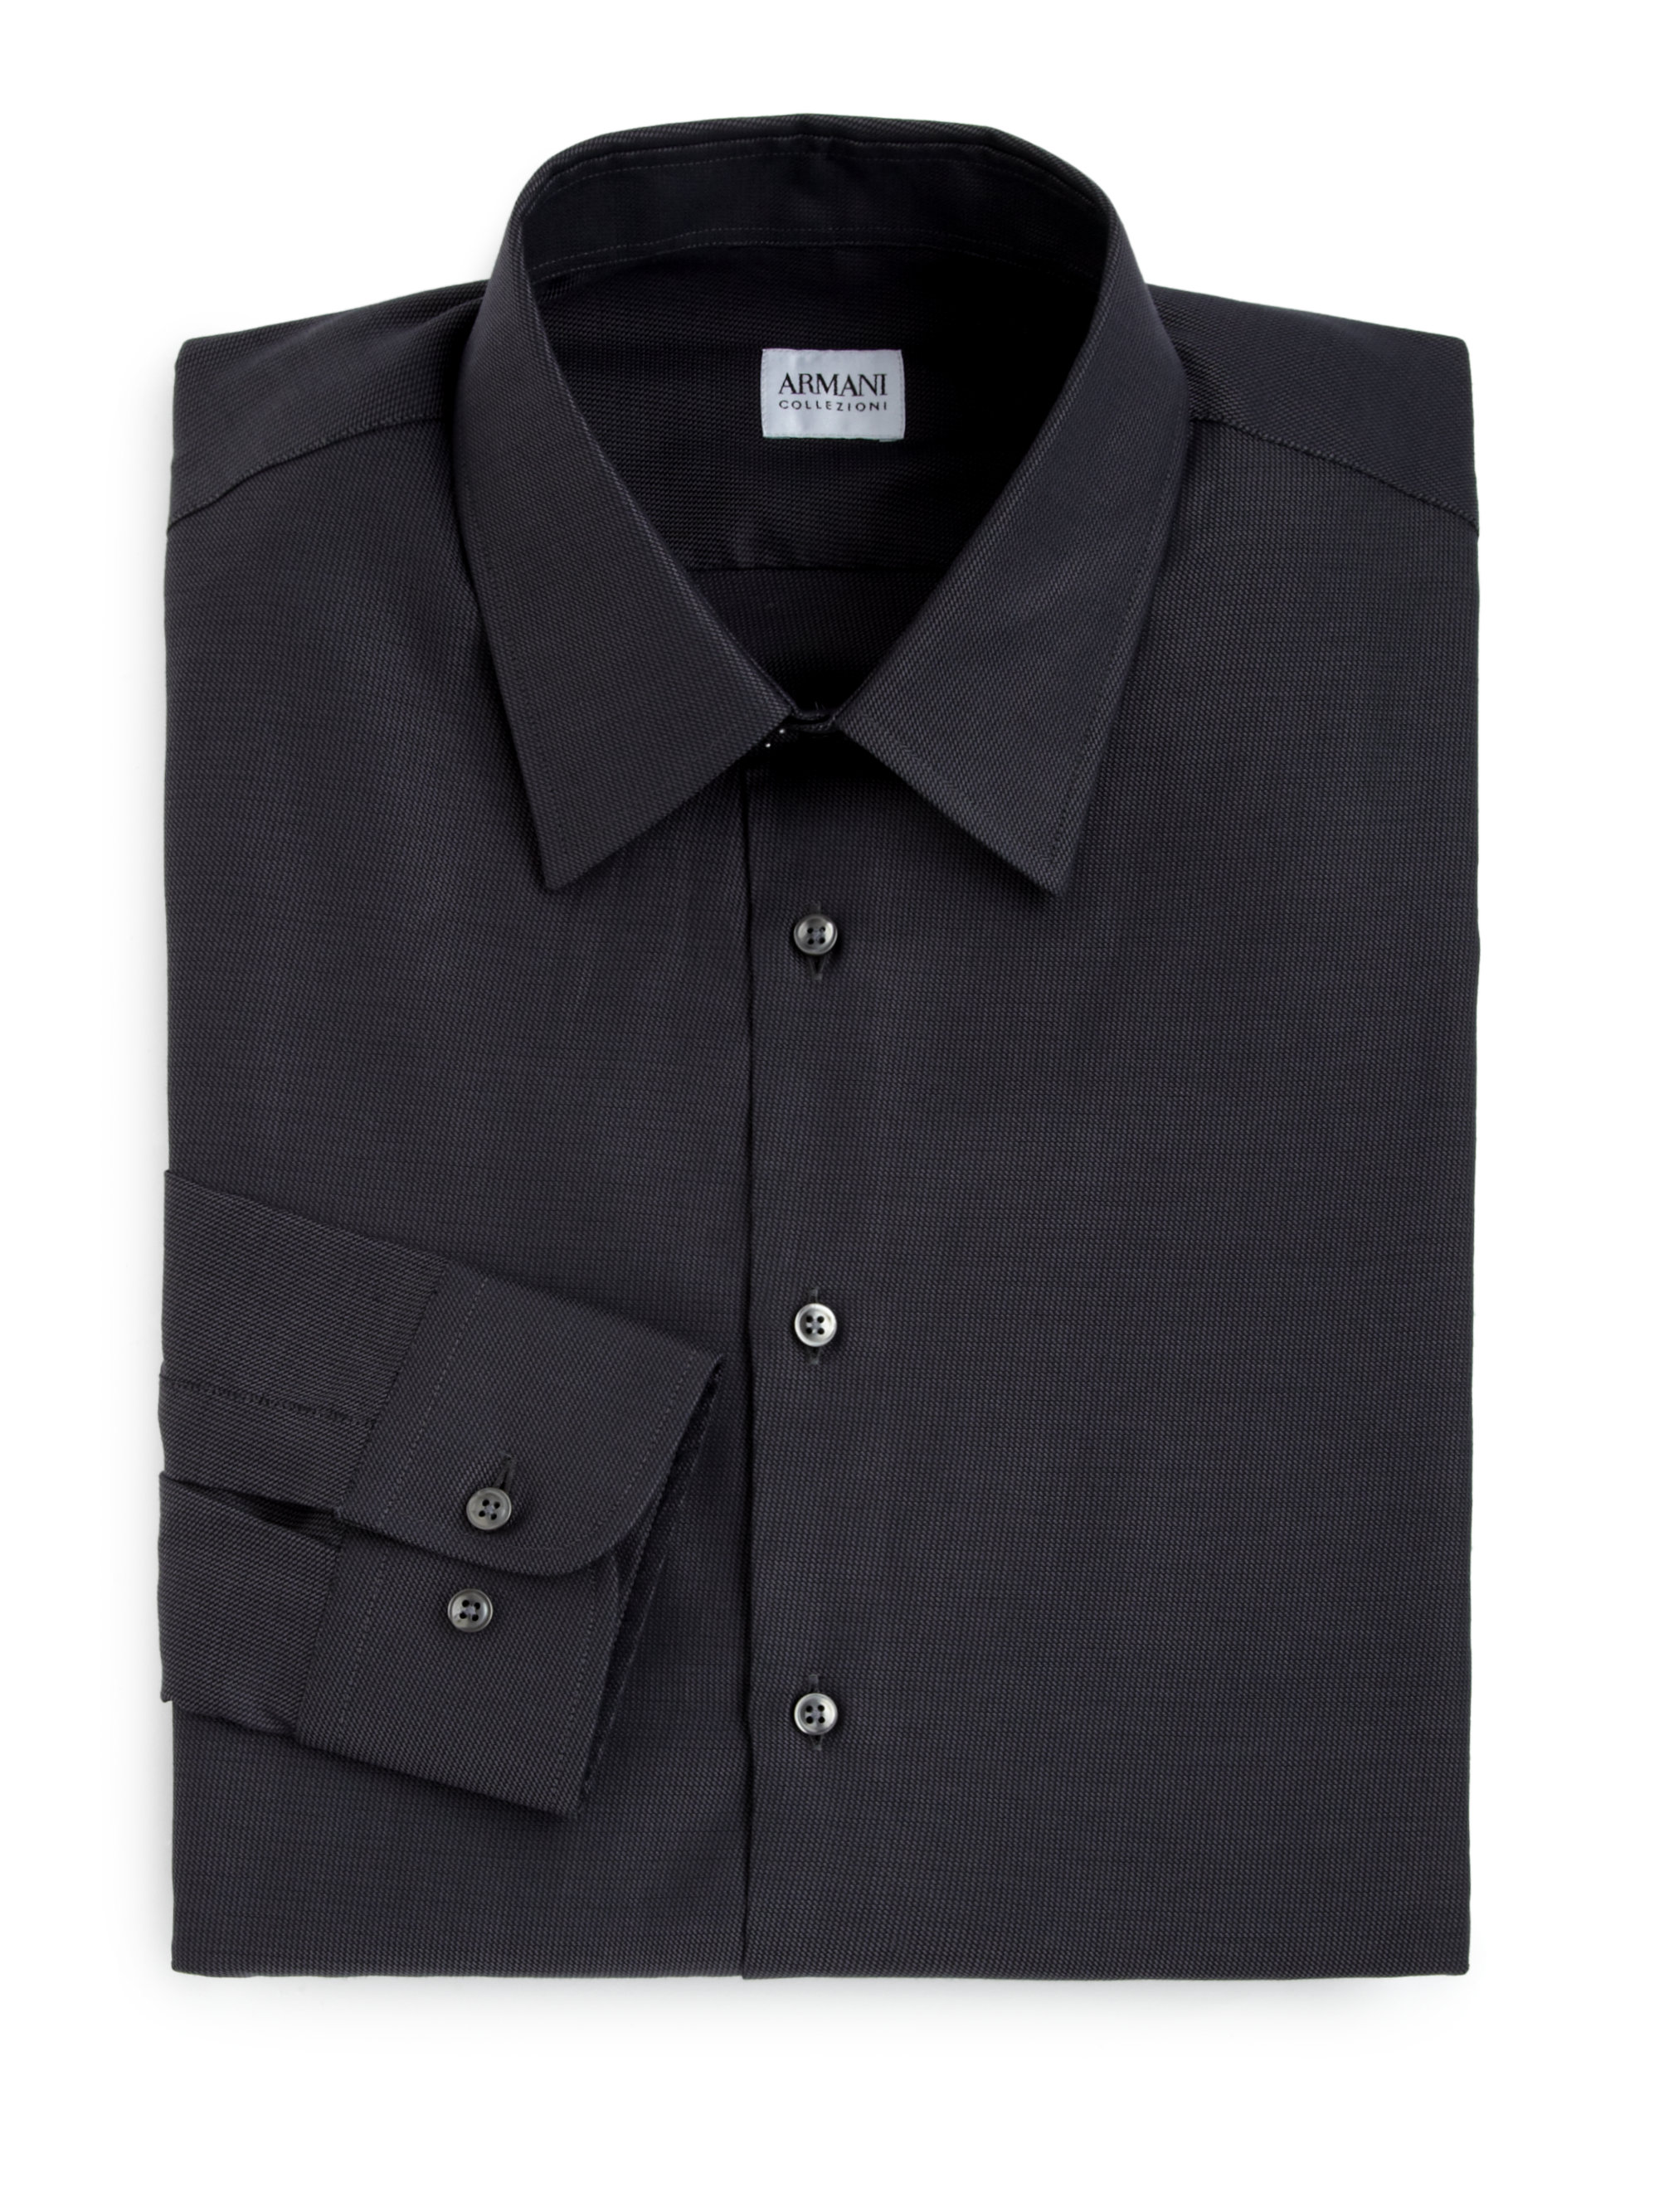 Lyst - Armani Micro Dot Cotton Dress Shirt in Gray for Men